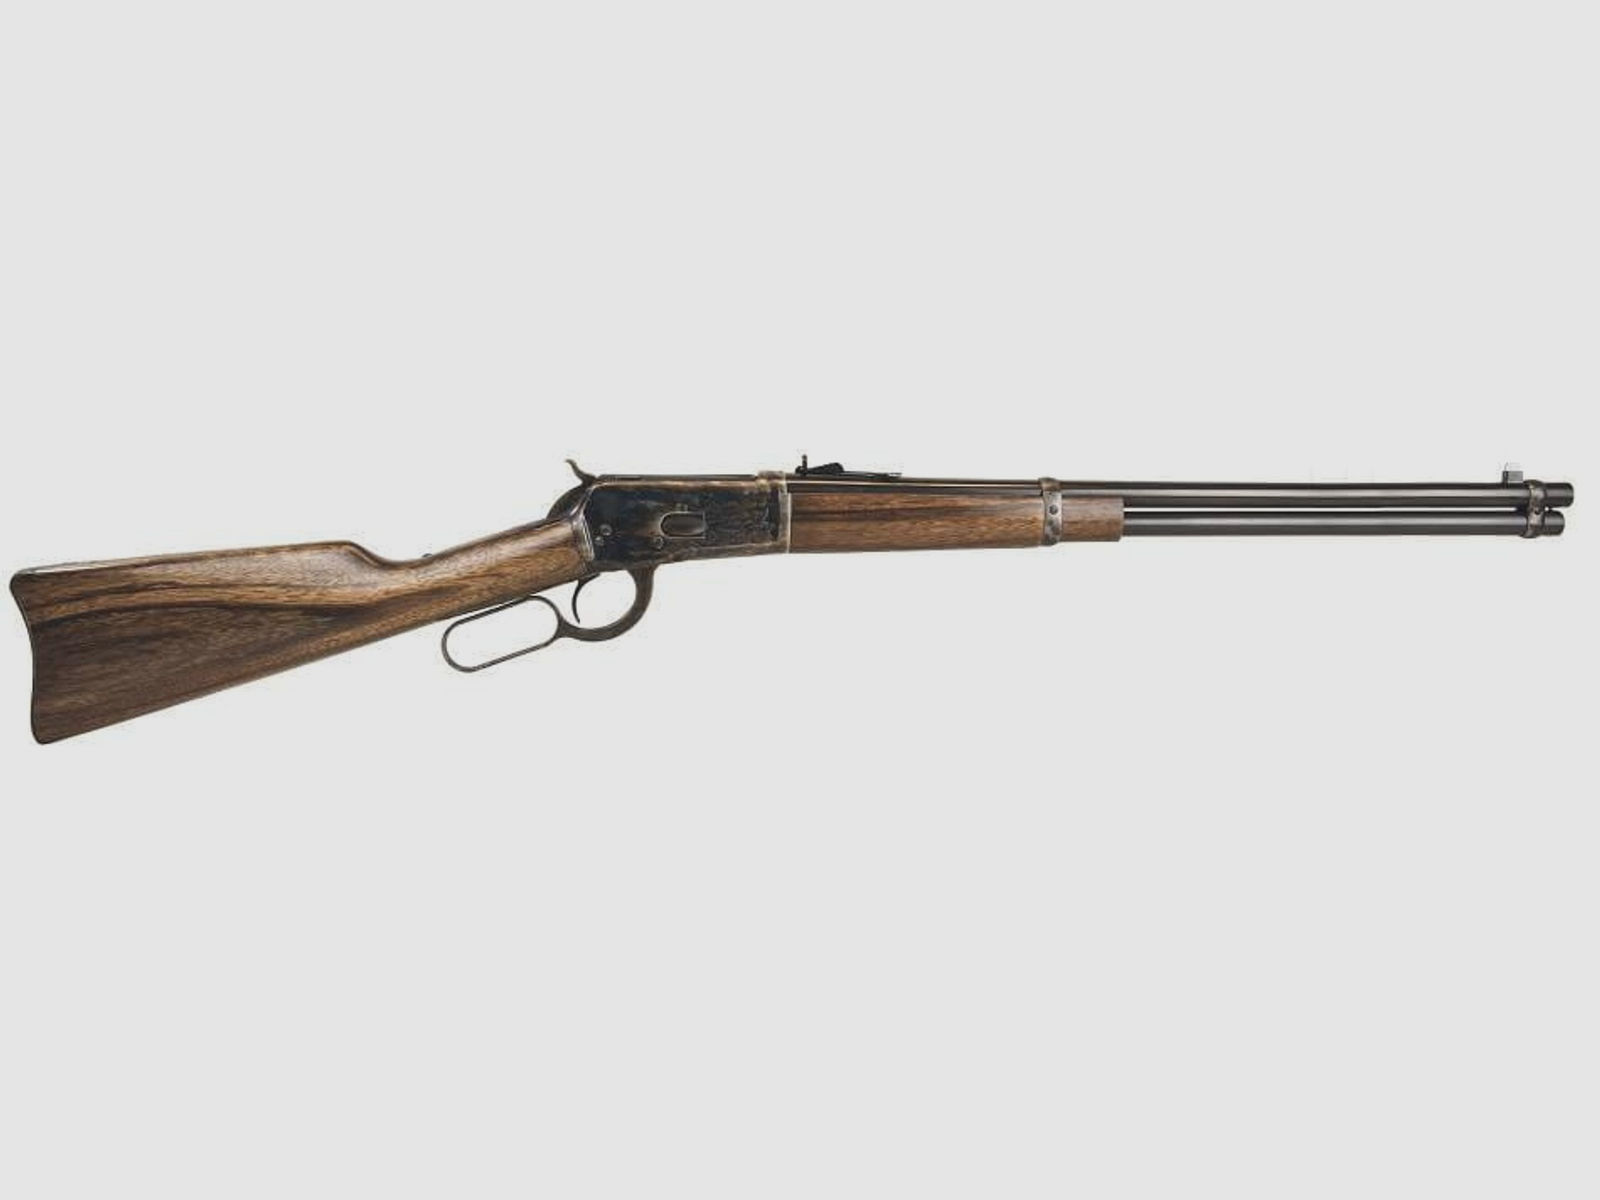 Chiappa 1892 Carbine - 20 Zoll Unterhebelrepetierbüchse Kal. .44 Rem. Mag.